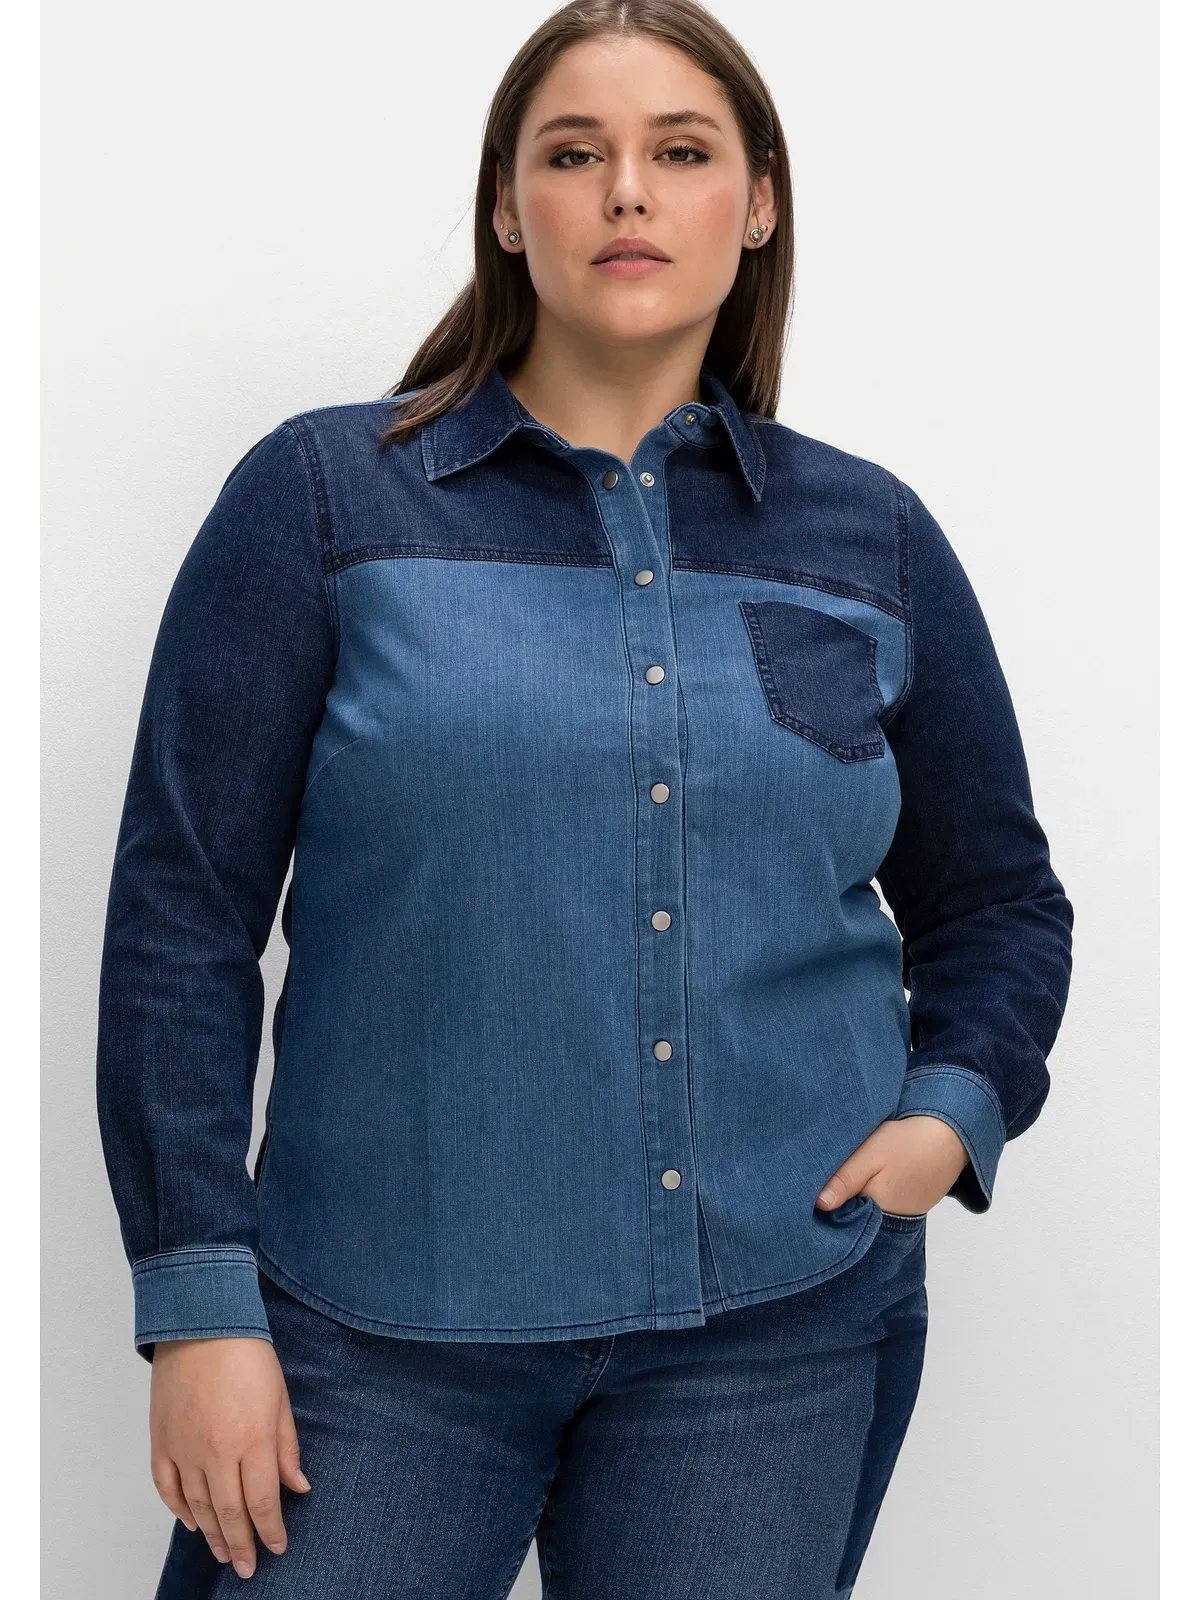 Jeansbluse SHEEGO "Große Größen" Gr. 52, blau (blue denim) Damen Blusen langarm